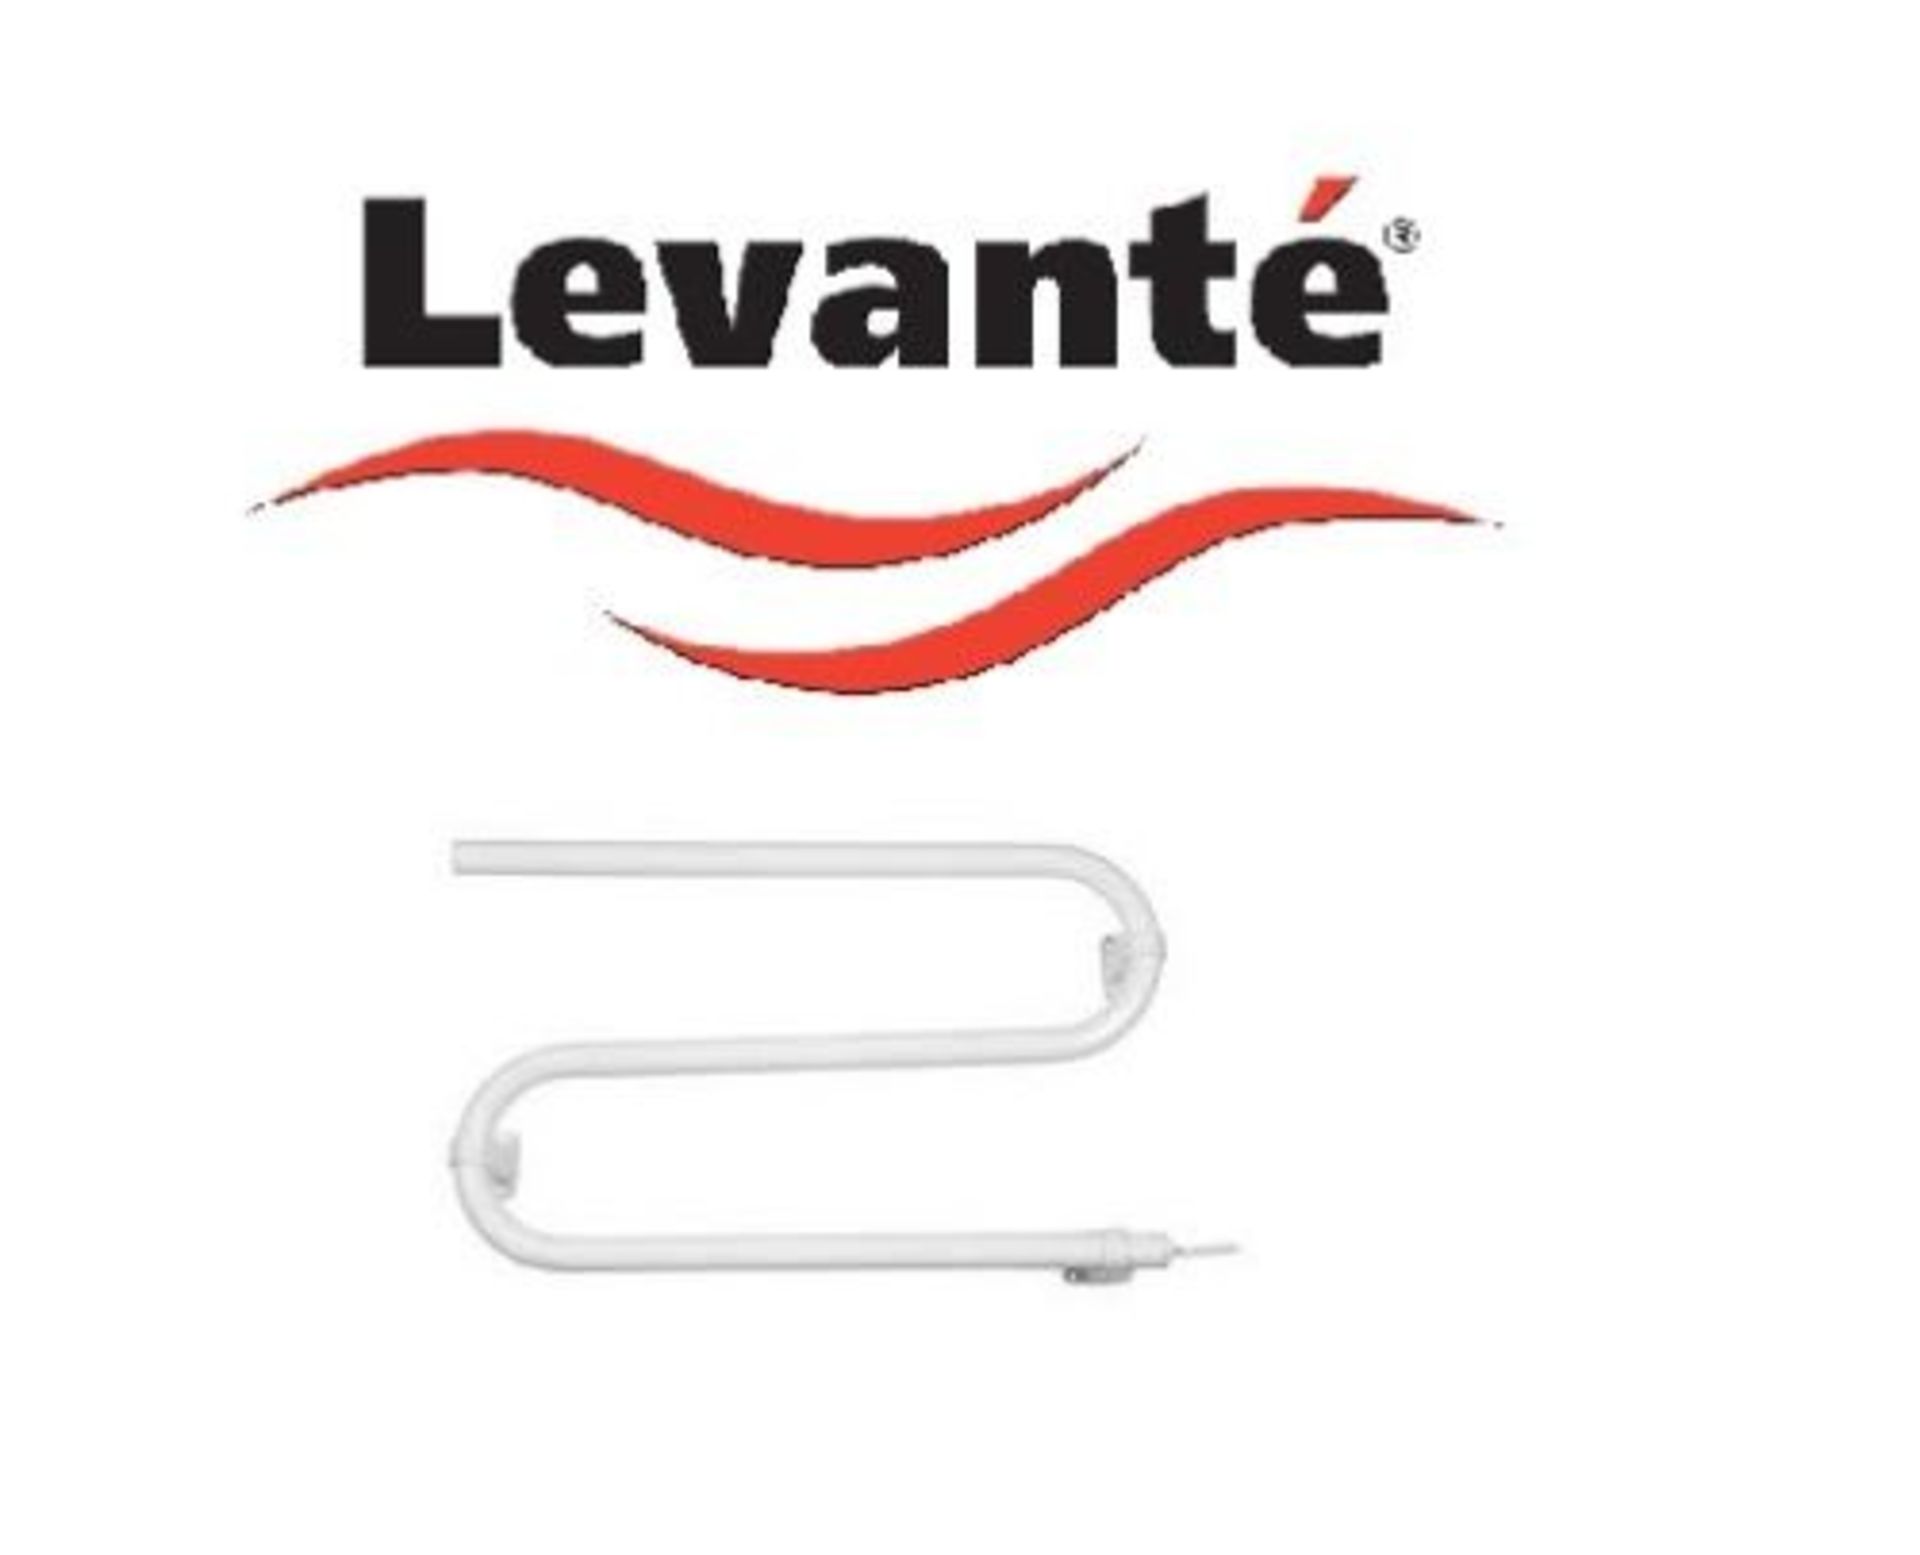 Job Lot x 20 Levante White 35W S-Type Electric Towel Rail Bathroom Heater Warmer